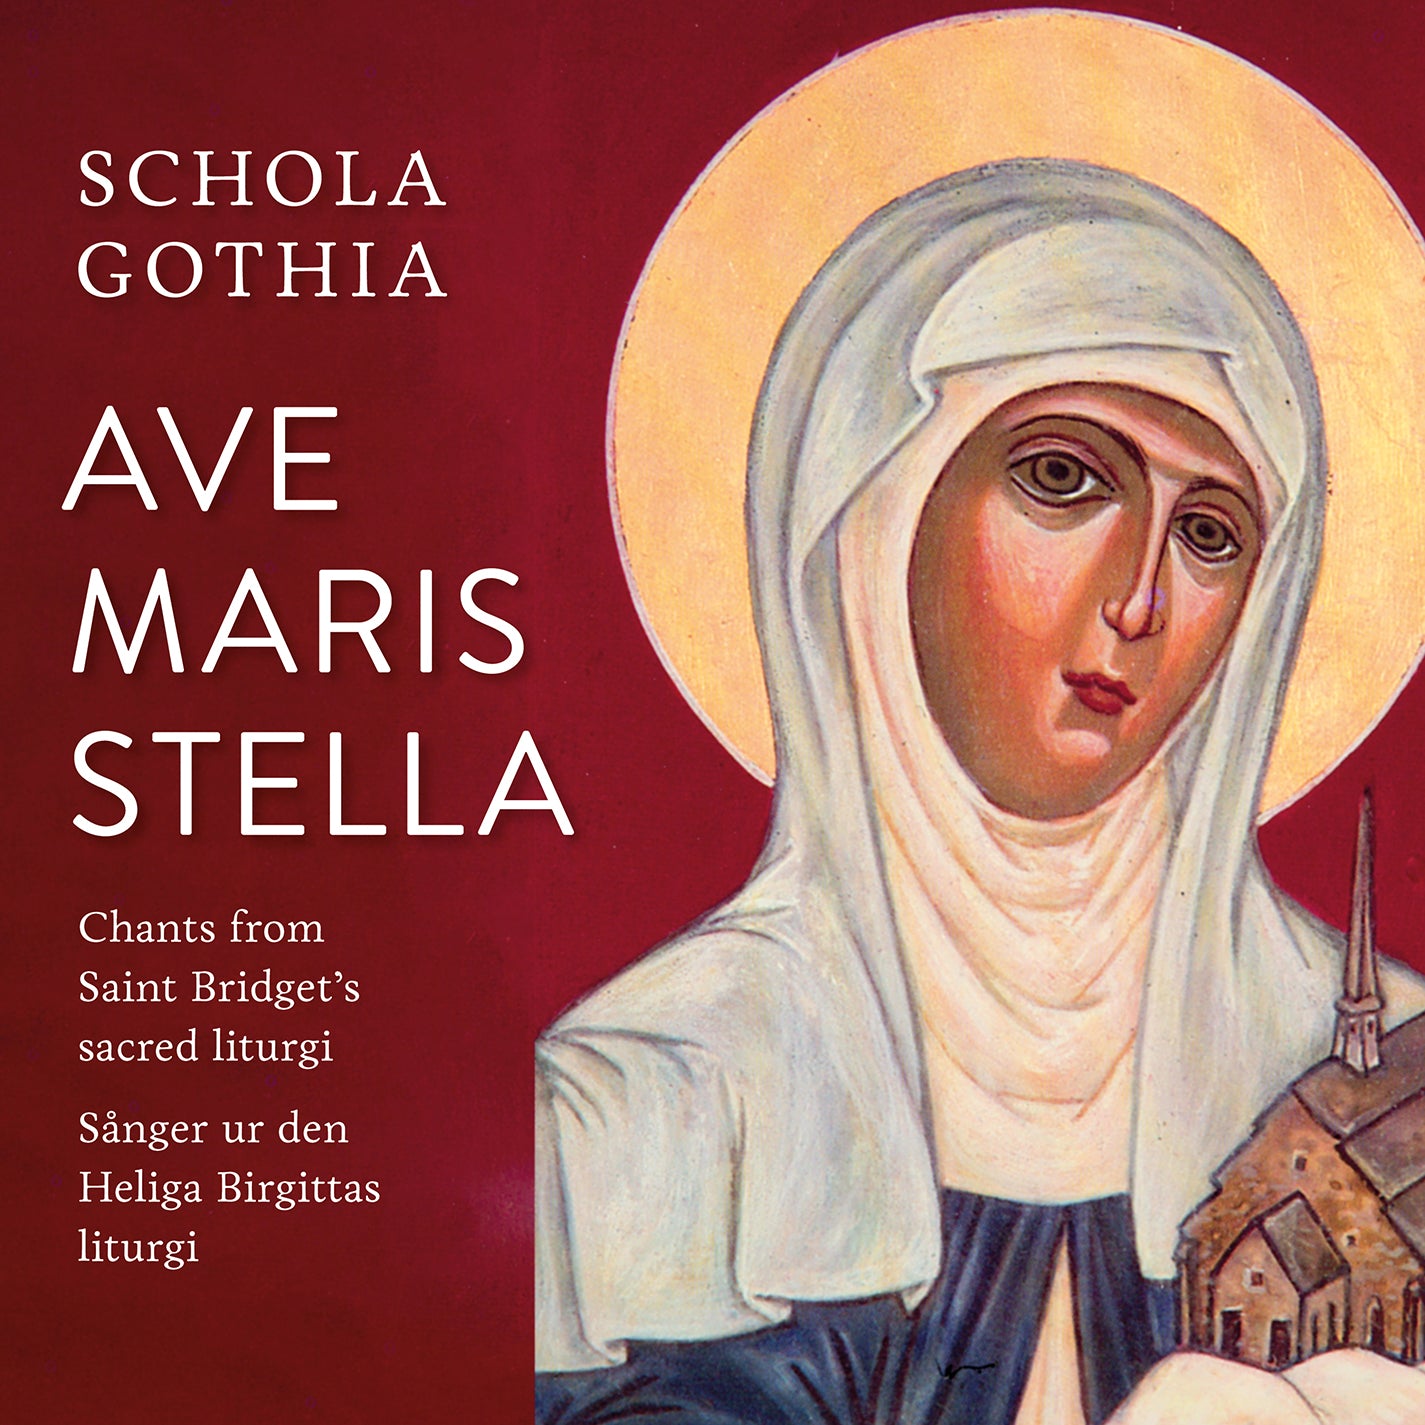 Ave maris stella - Music from Medieval Monastic Manuscripts / Schola Gothia